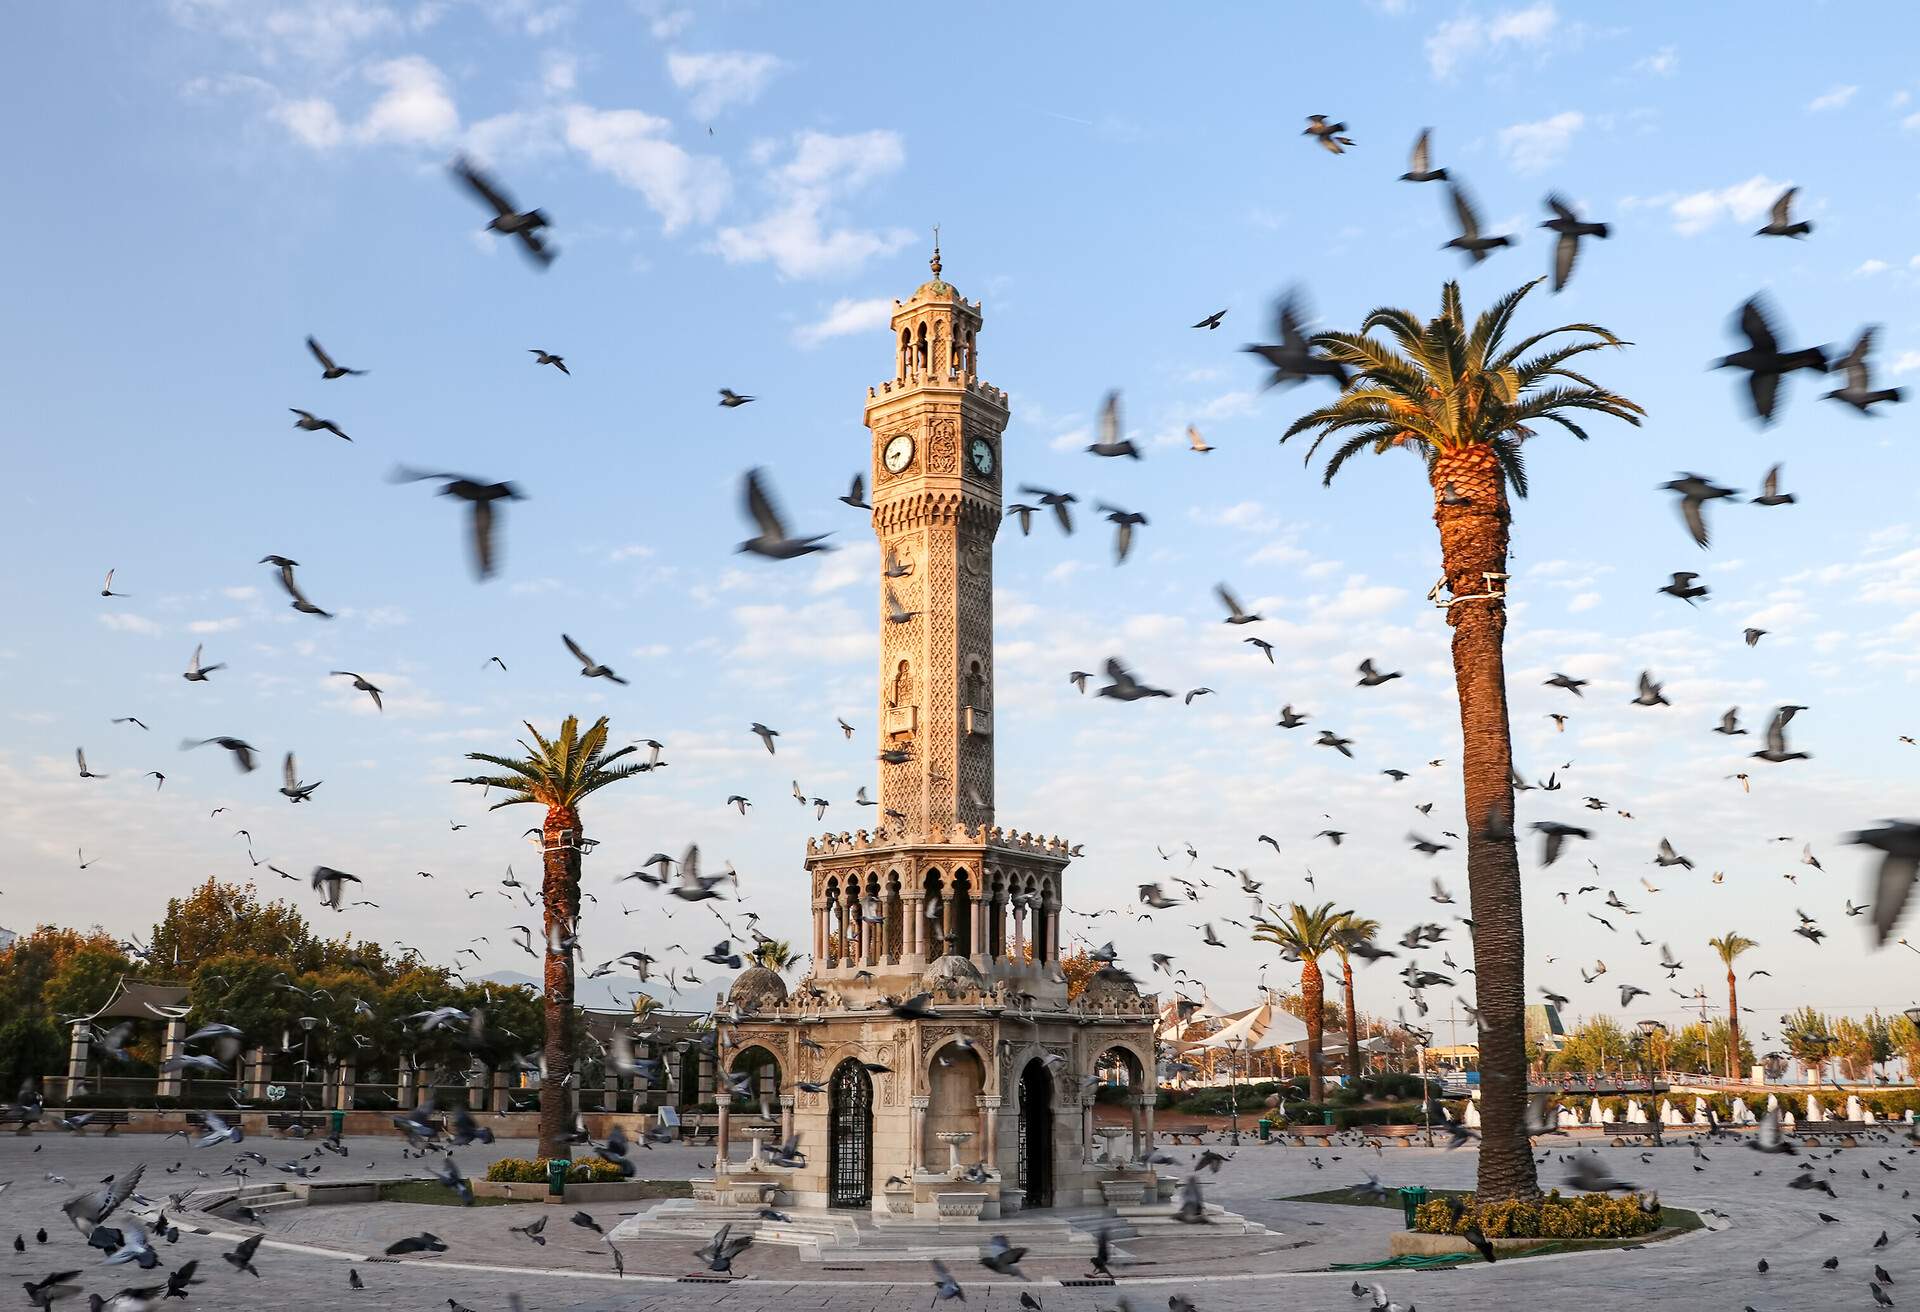 Birds flying around a monument in Izmir